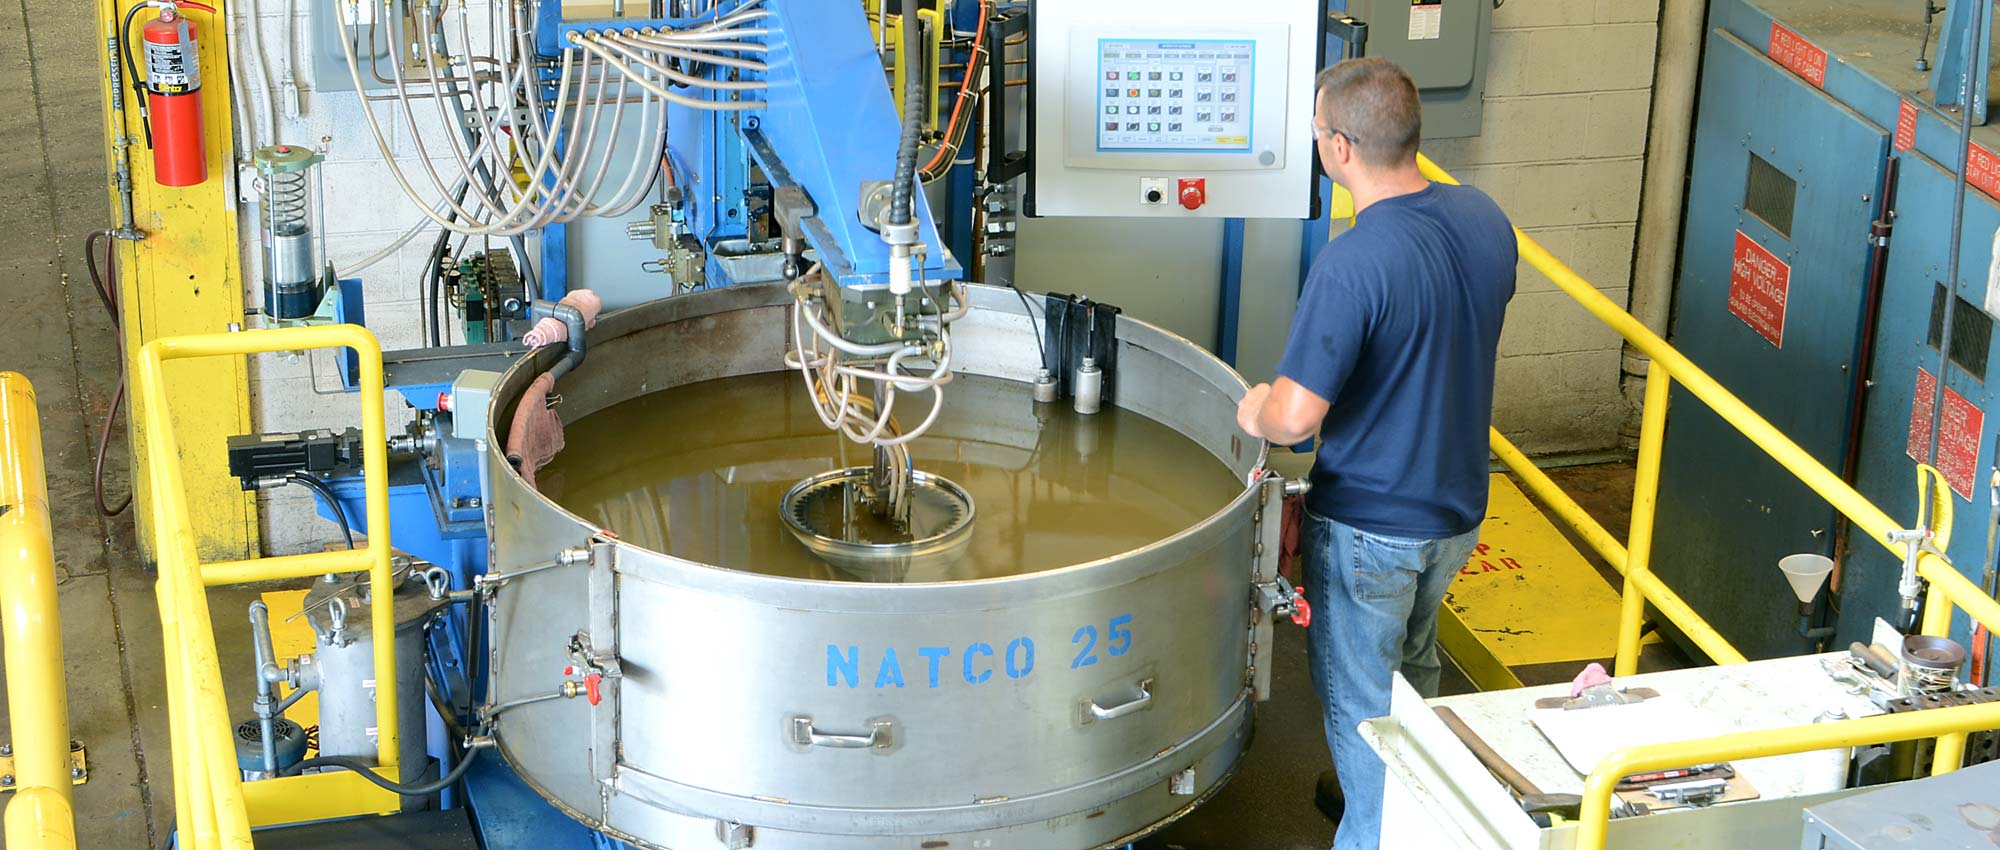 NATCO Induction Hardening Machine